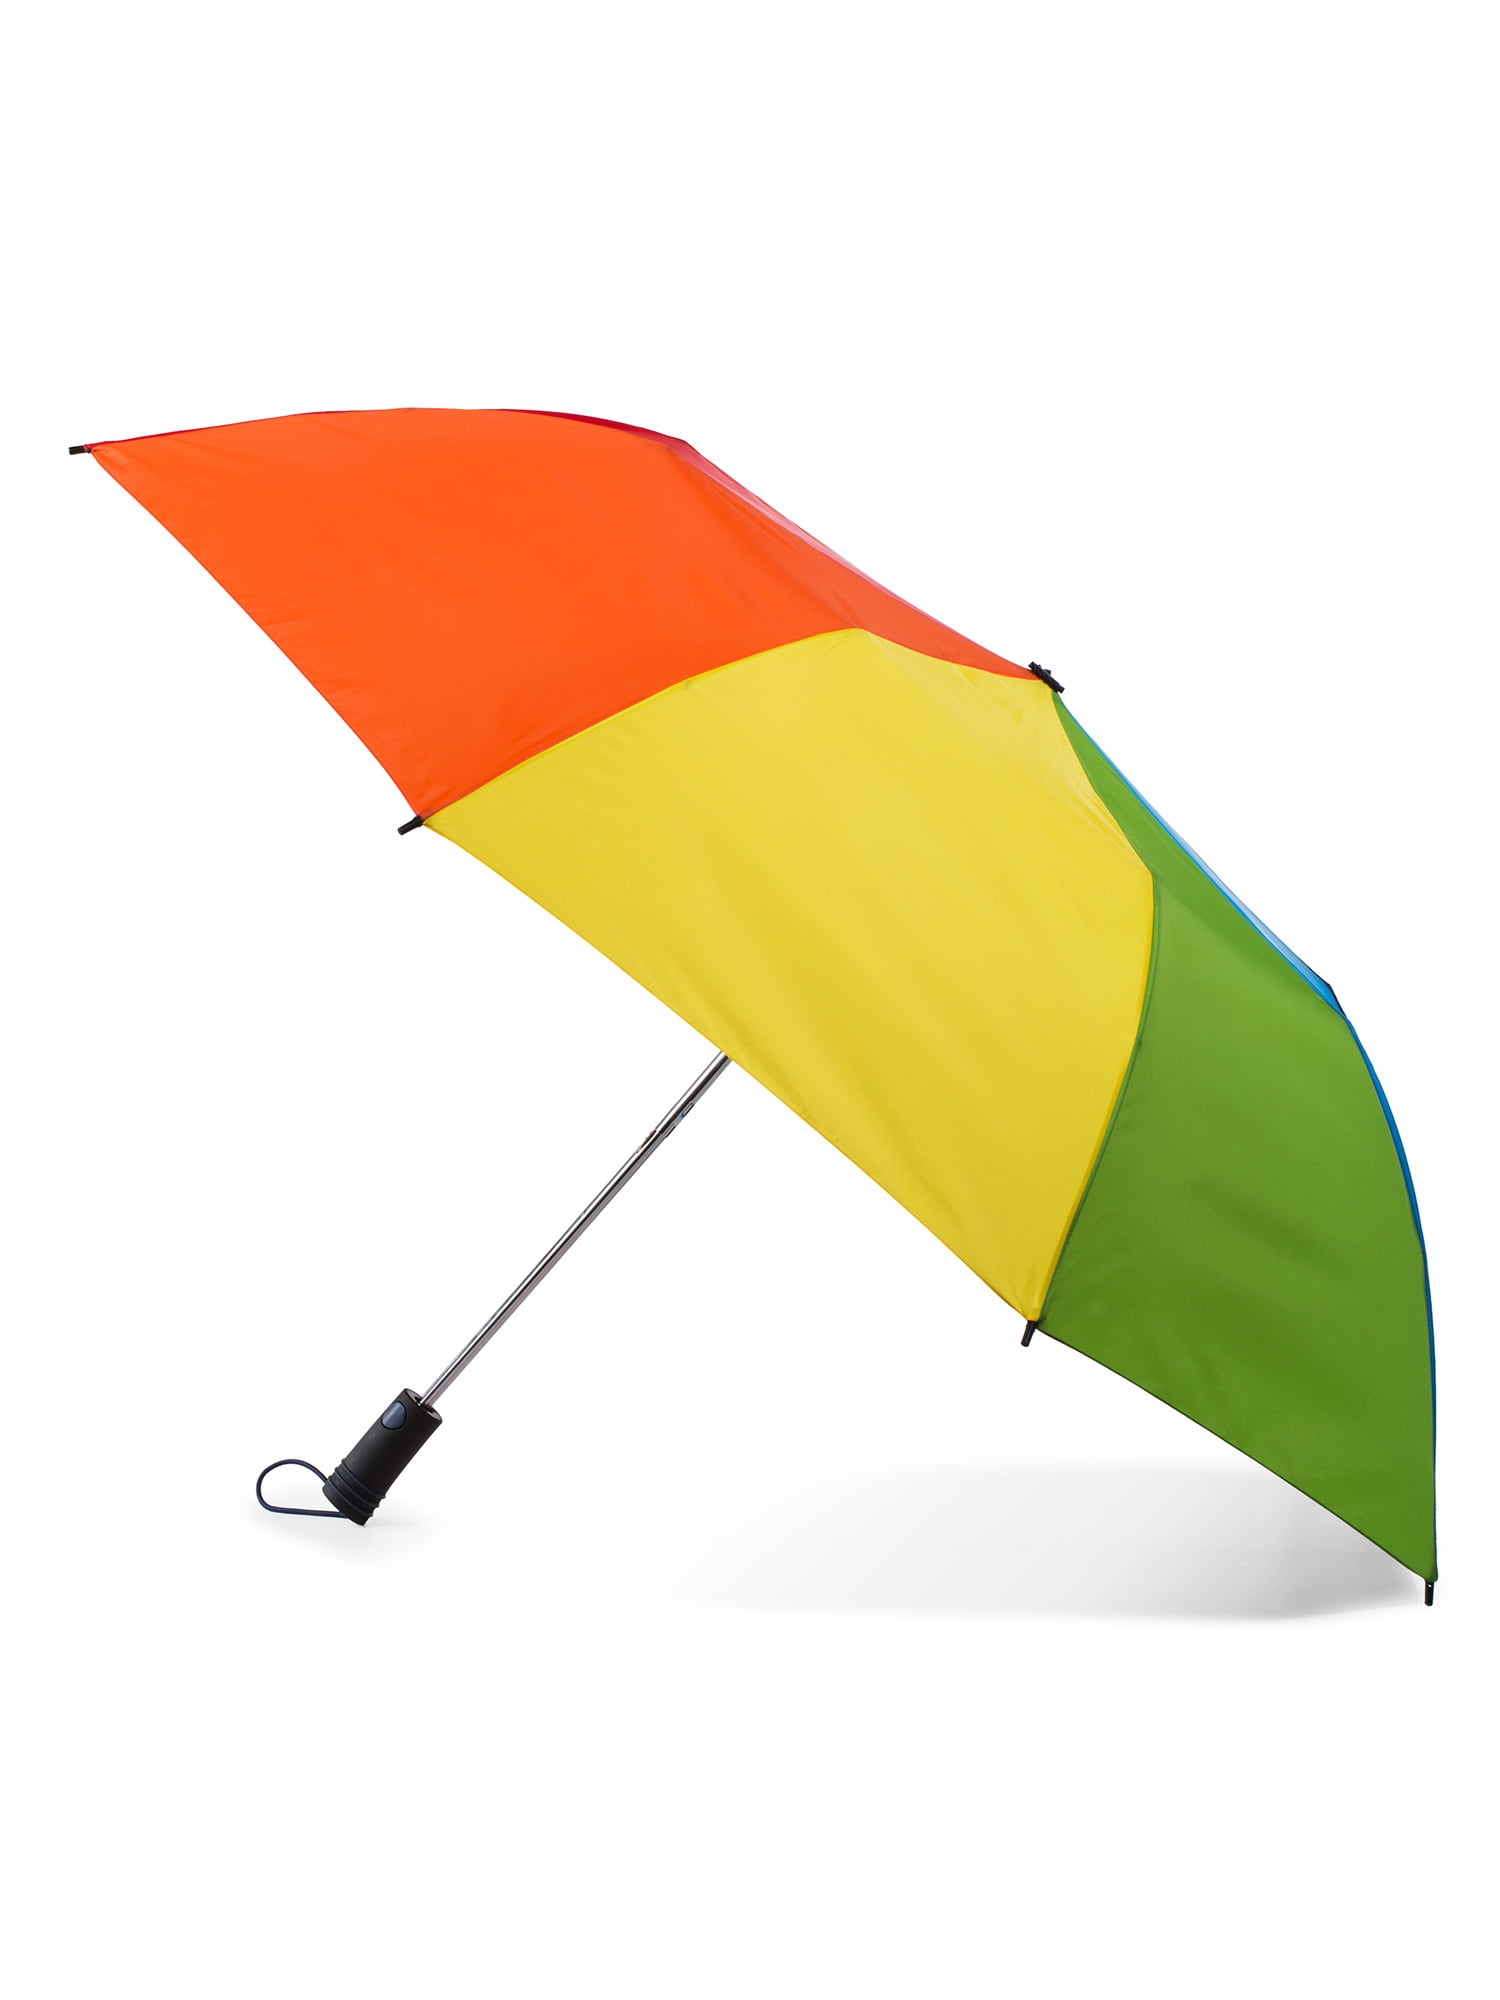 totes One-touch Auto Open Close Golf Umbrella with Sunguard